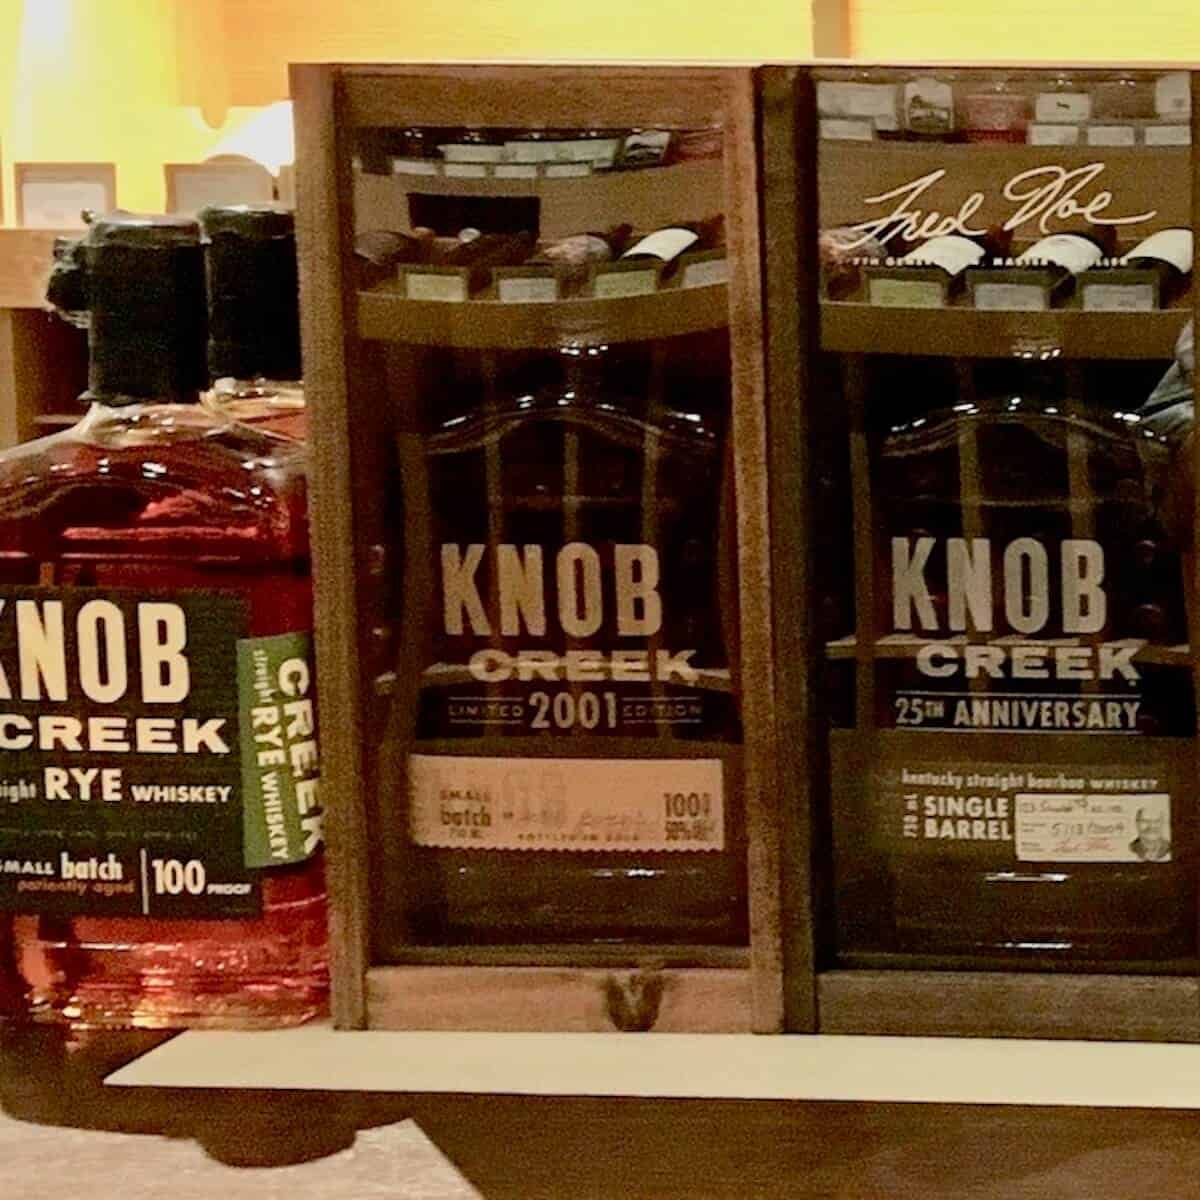 Knob Creek lineup bottles on a counter.